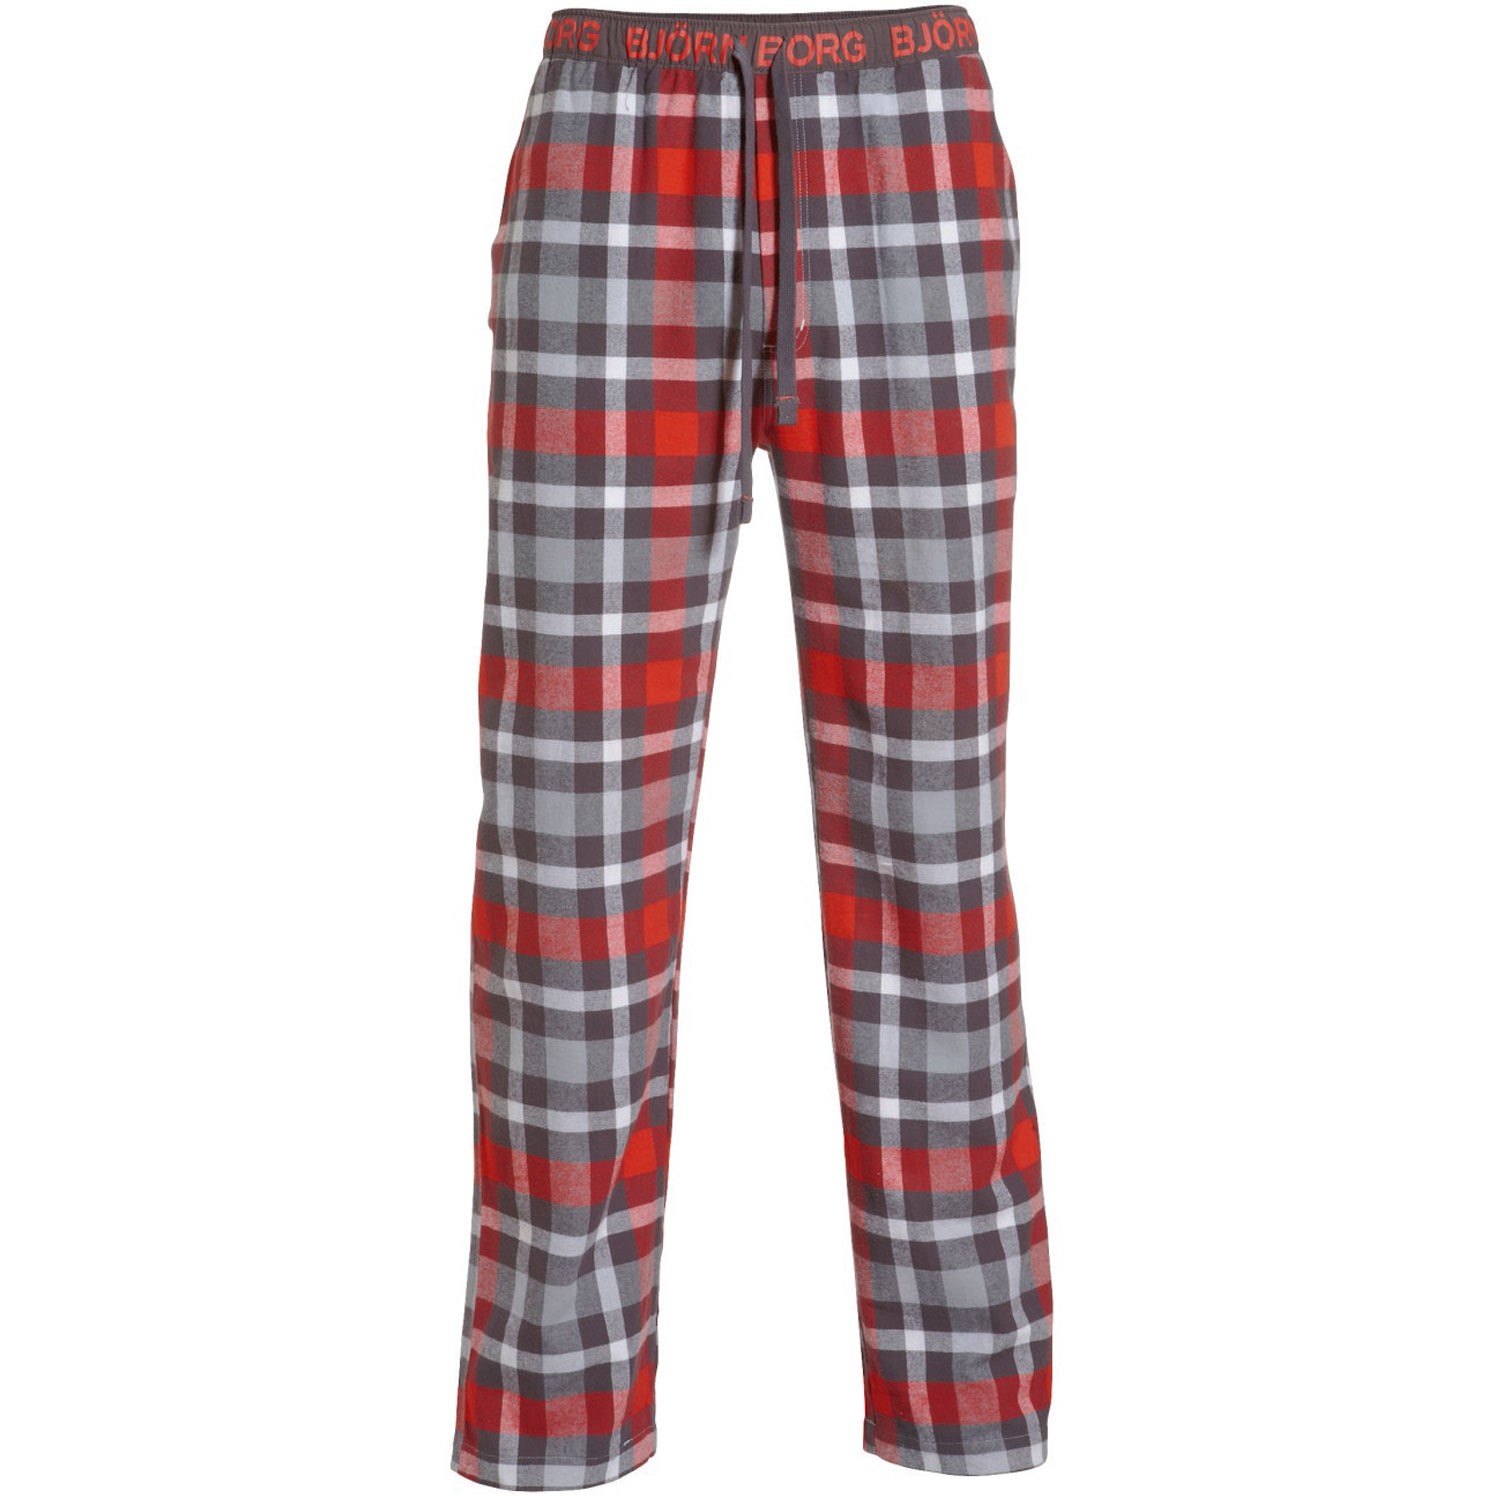 Björn Borg Pyjama Pants Check on Check Periscope